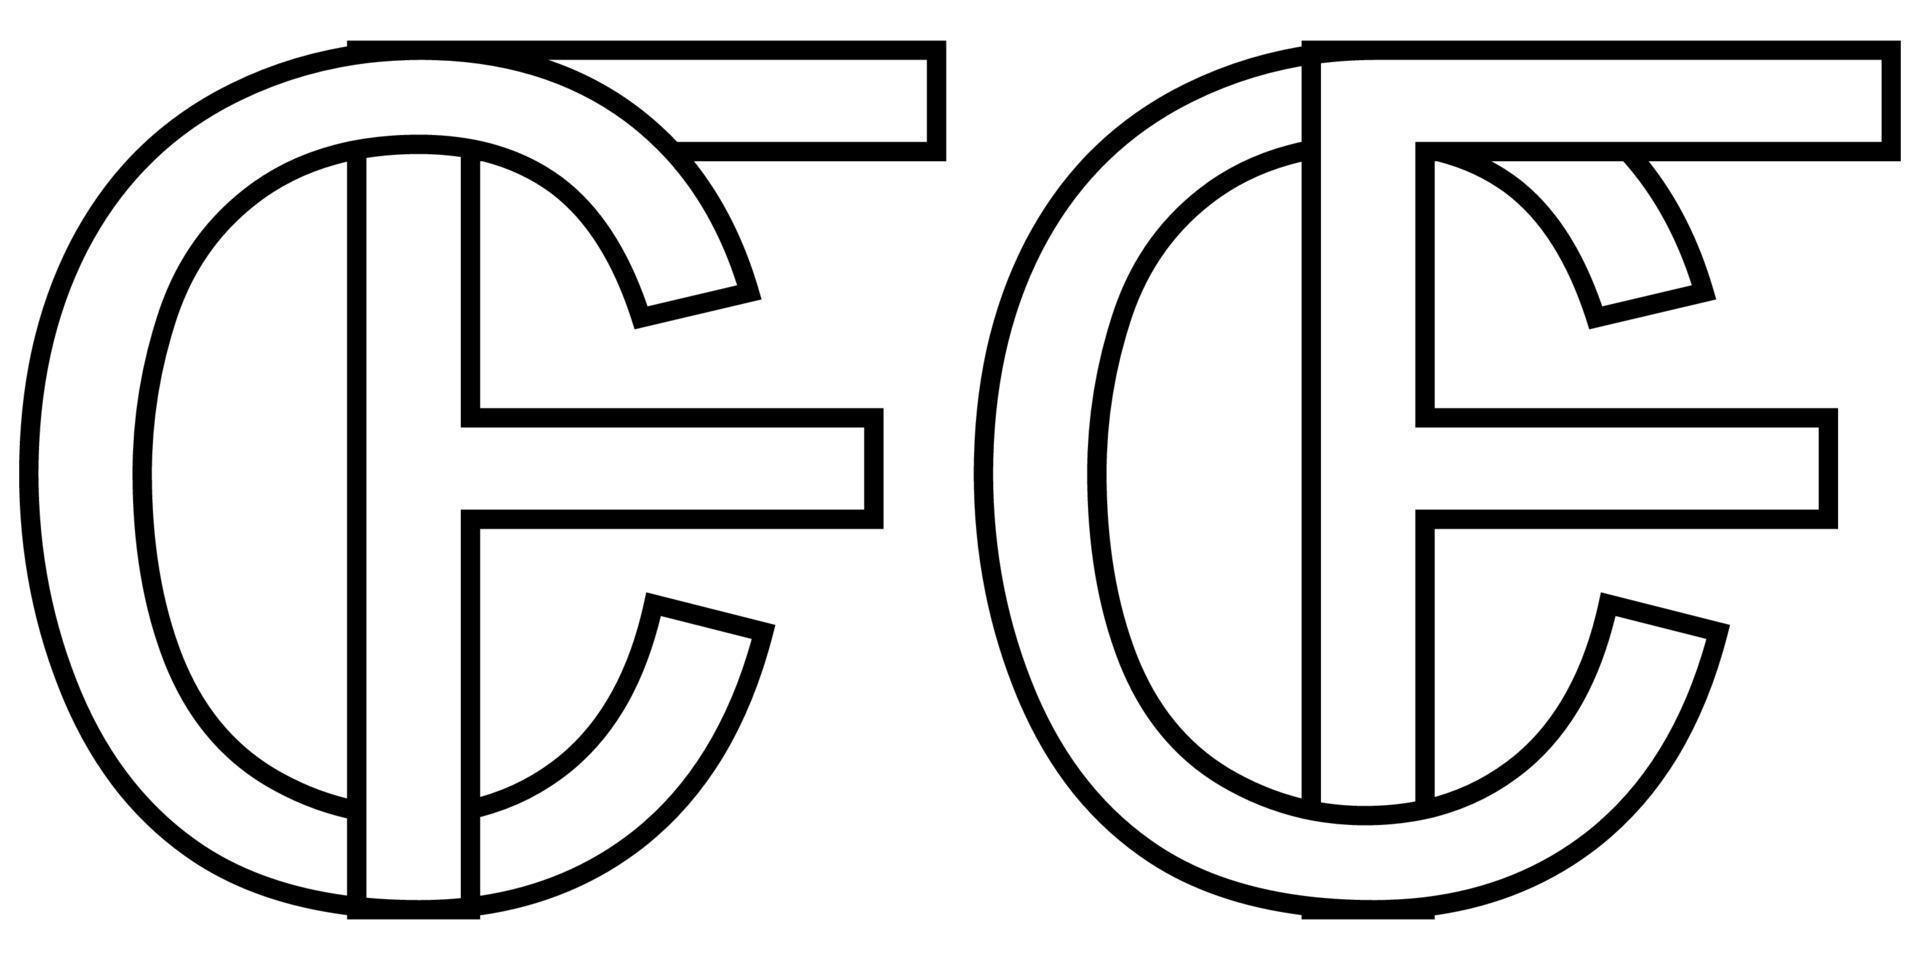 logo firmar fc cf icono firmar dos entrelazado letras F, C vector logo f.c., cf primero capital letras modelo alfabeto F, C